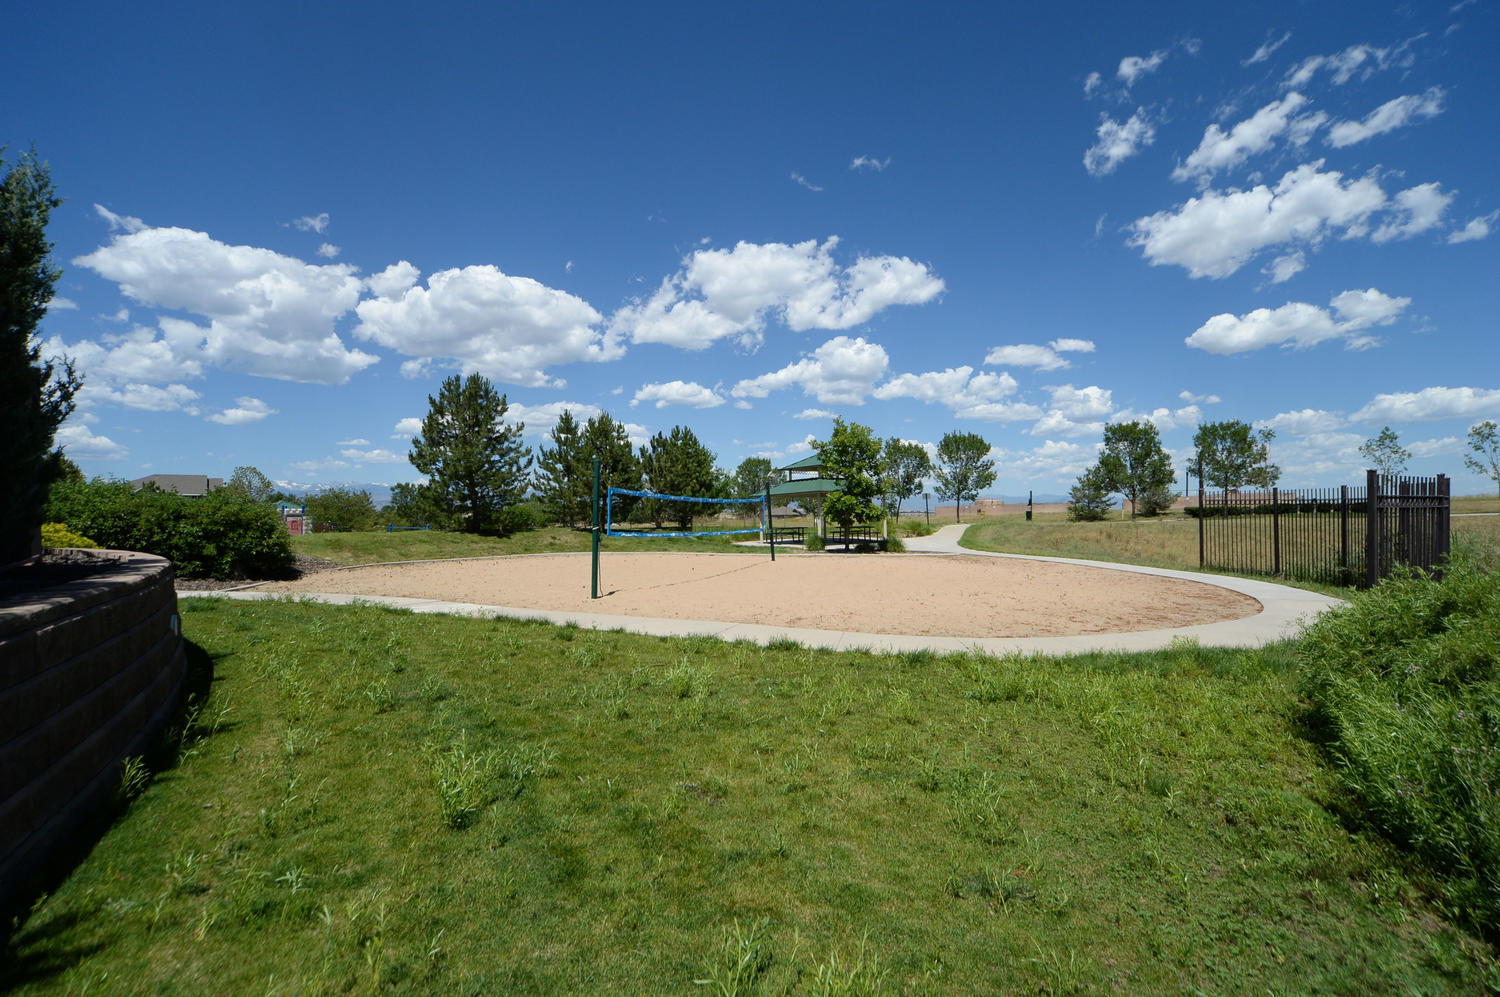 Neighborhood Volleyball Court